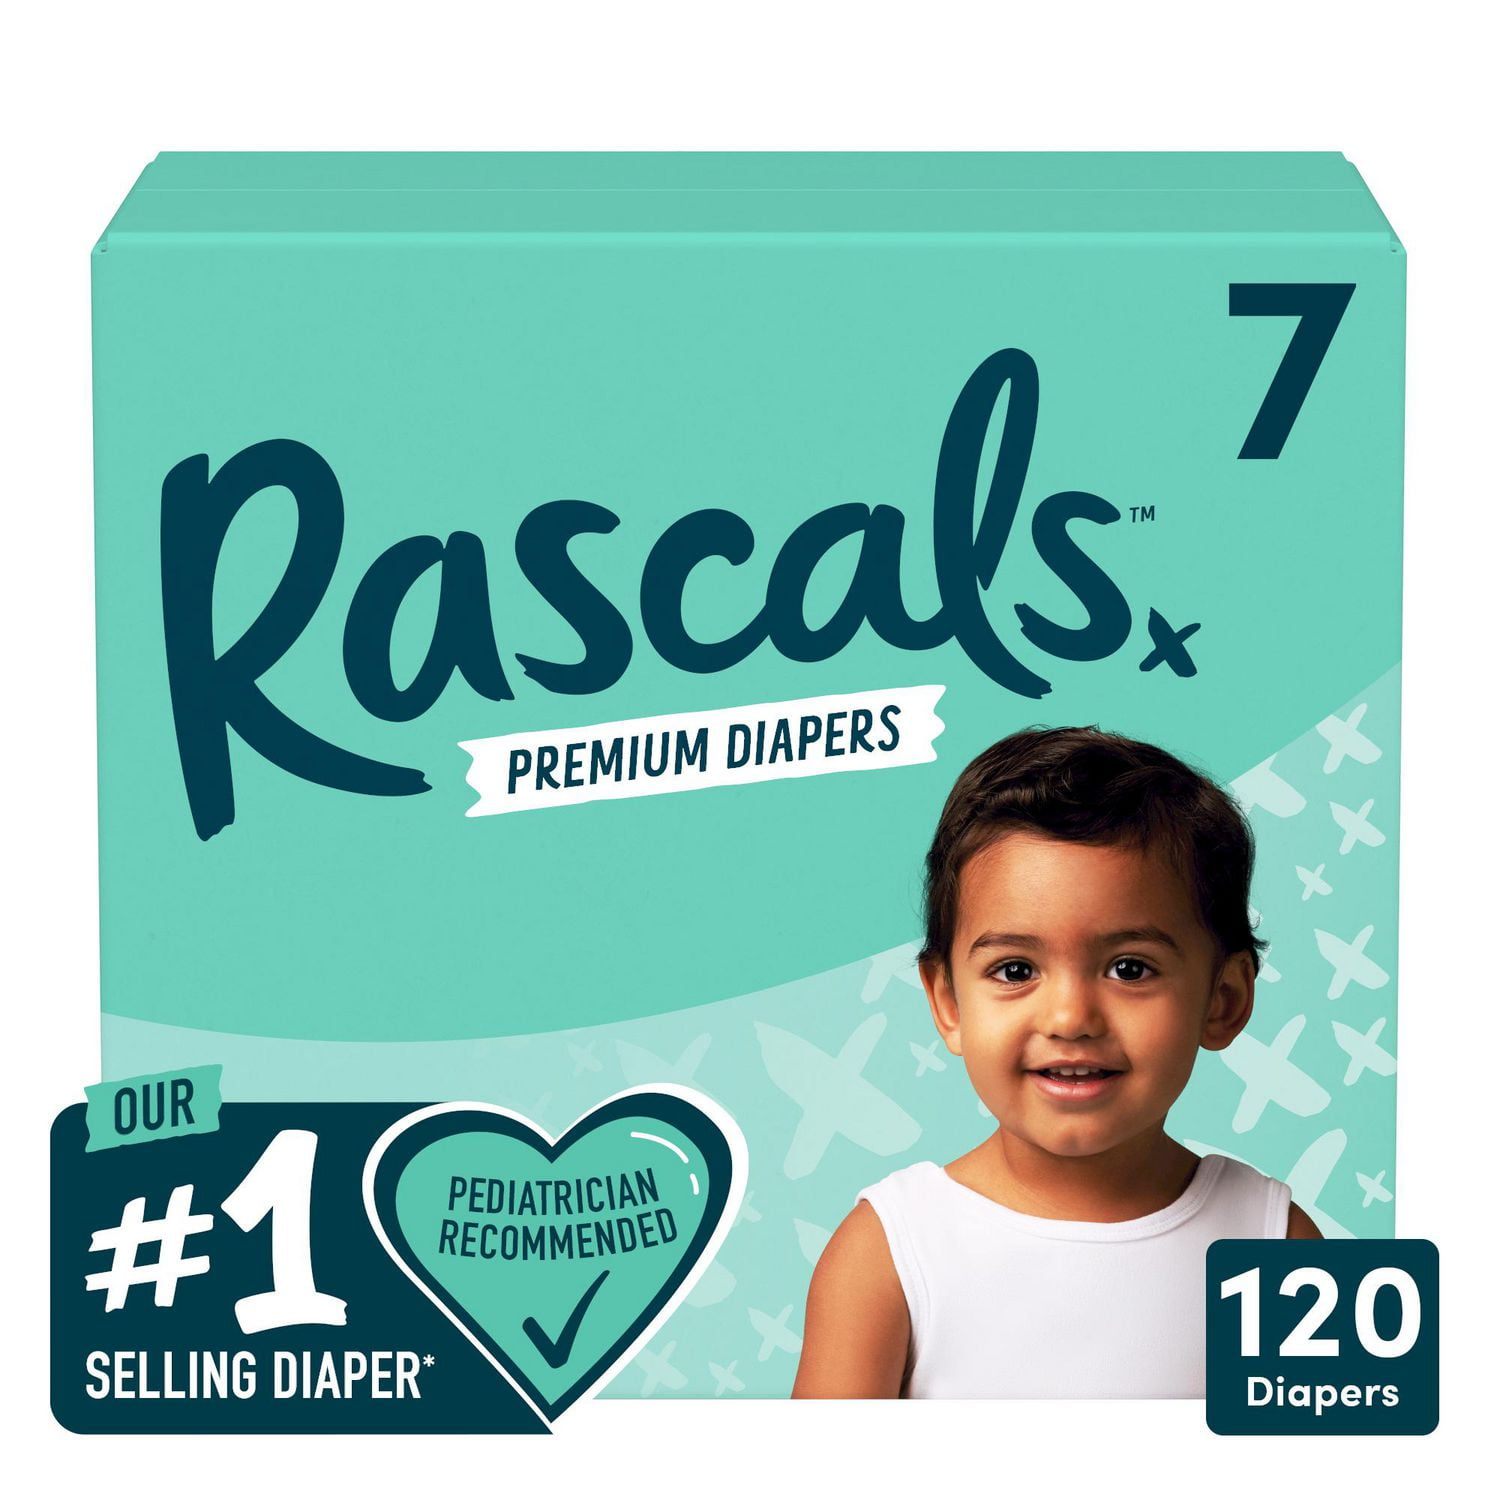 Rascal + Friends Premium Diapers - Super Value Pack, Unisex, Size